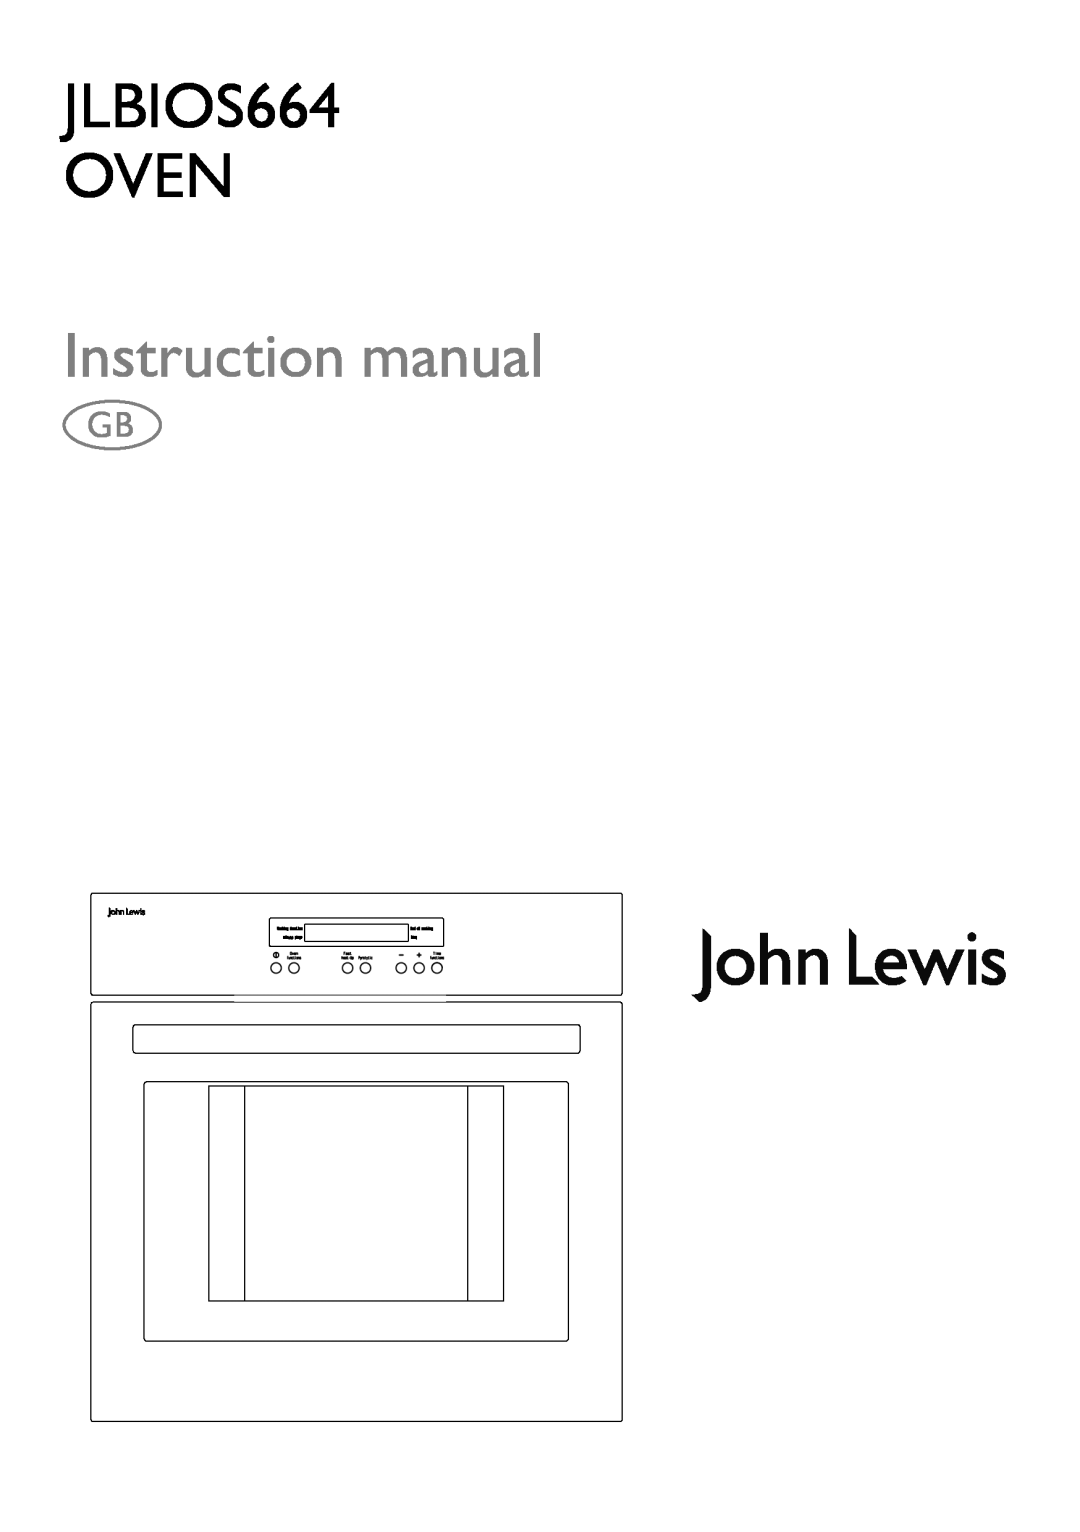 John Lewis instruction manual JLBIOS664 OVEN 